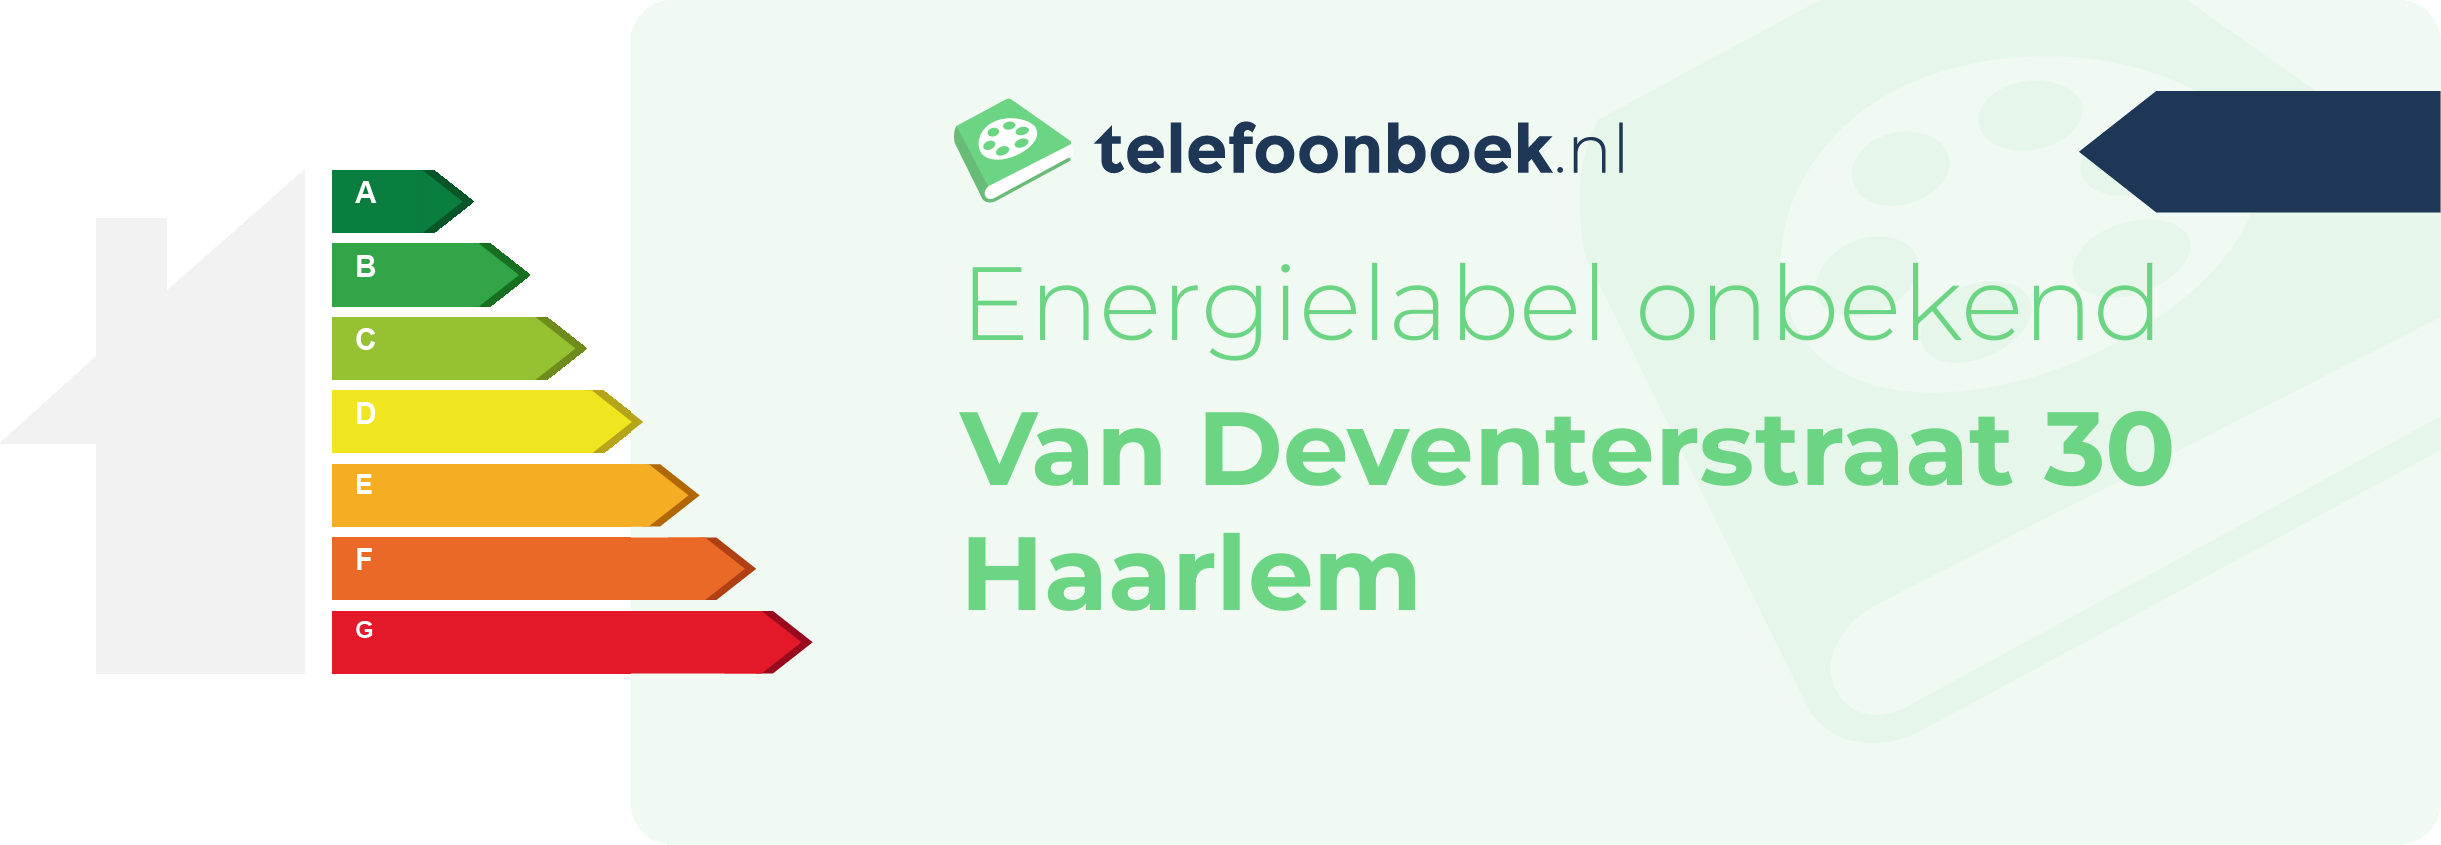 Energielabel Van Deventerstraat 30 Haarlem